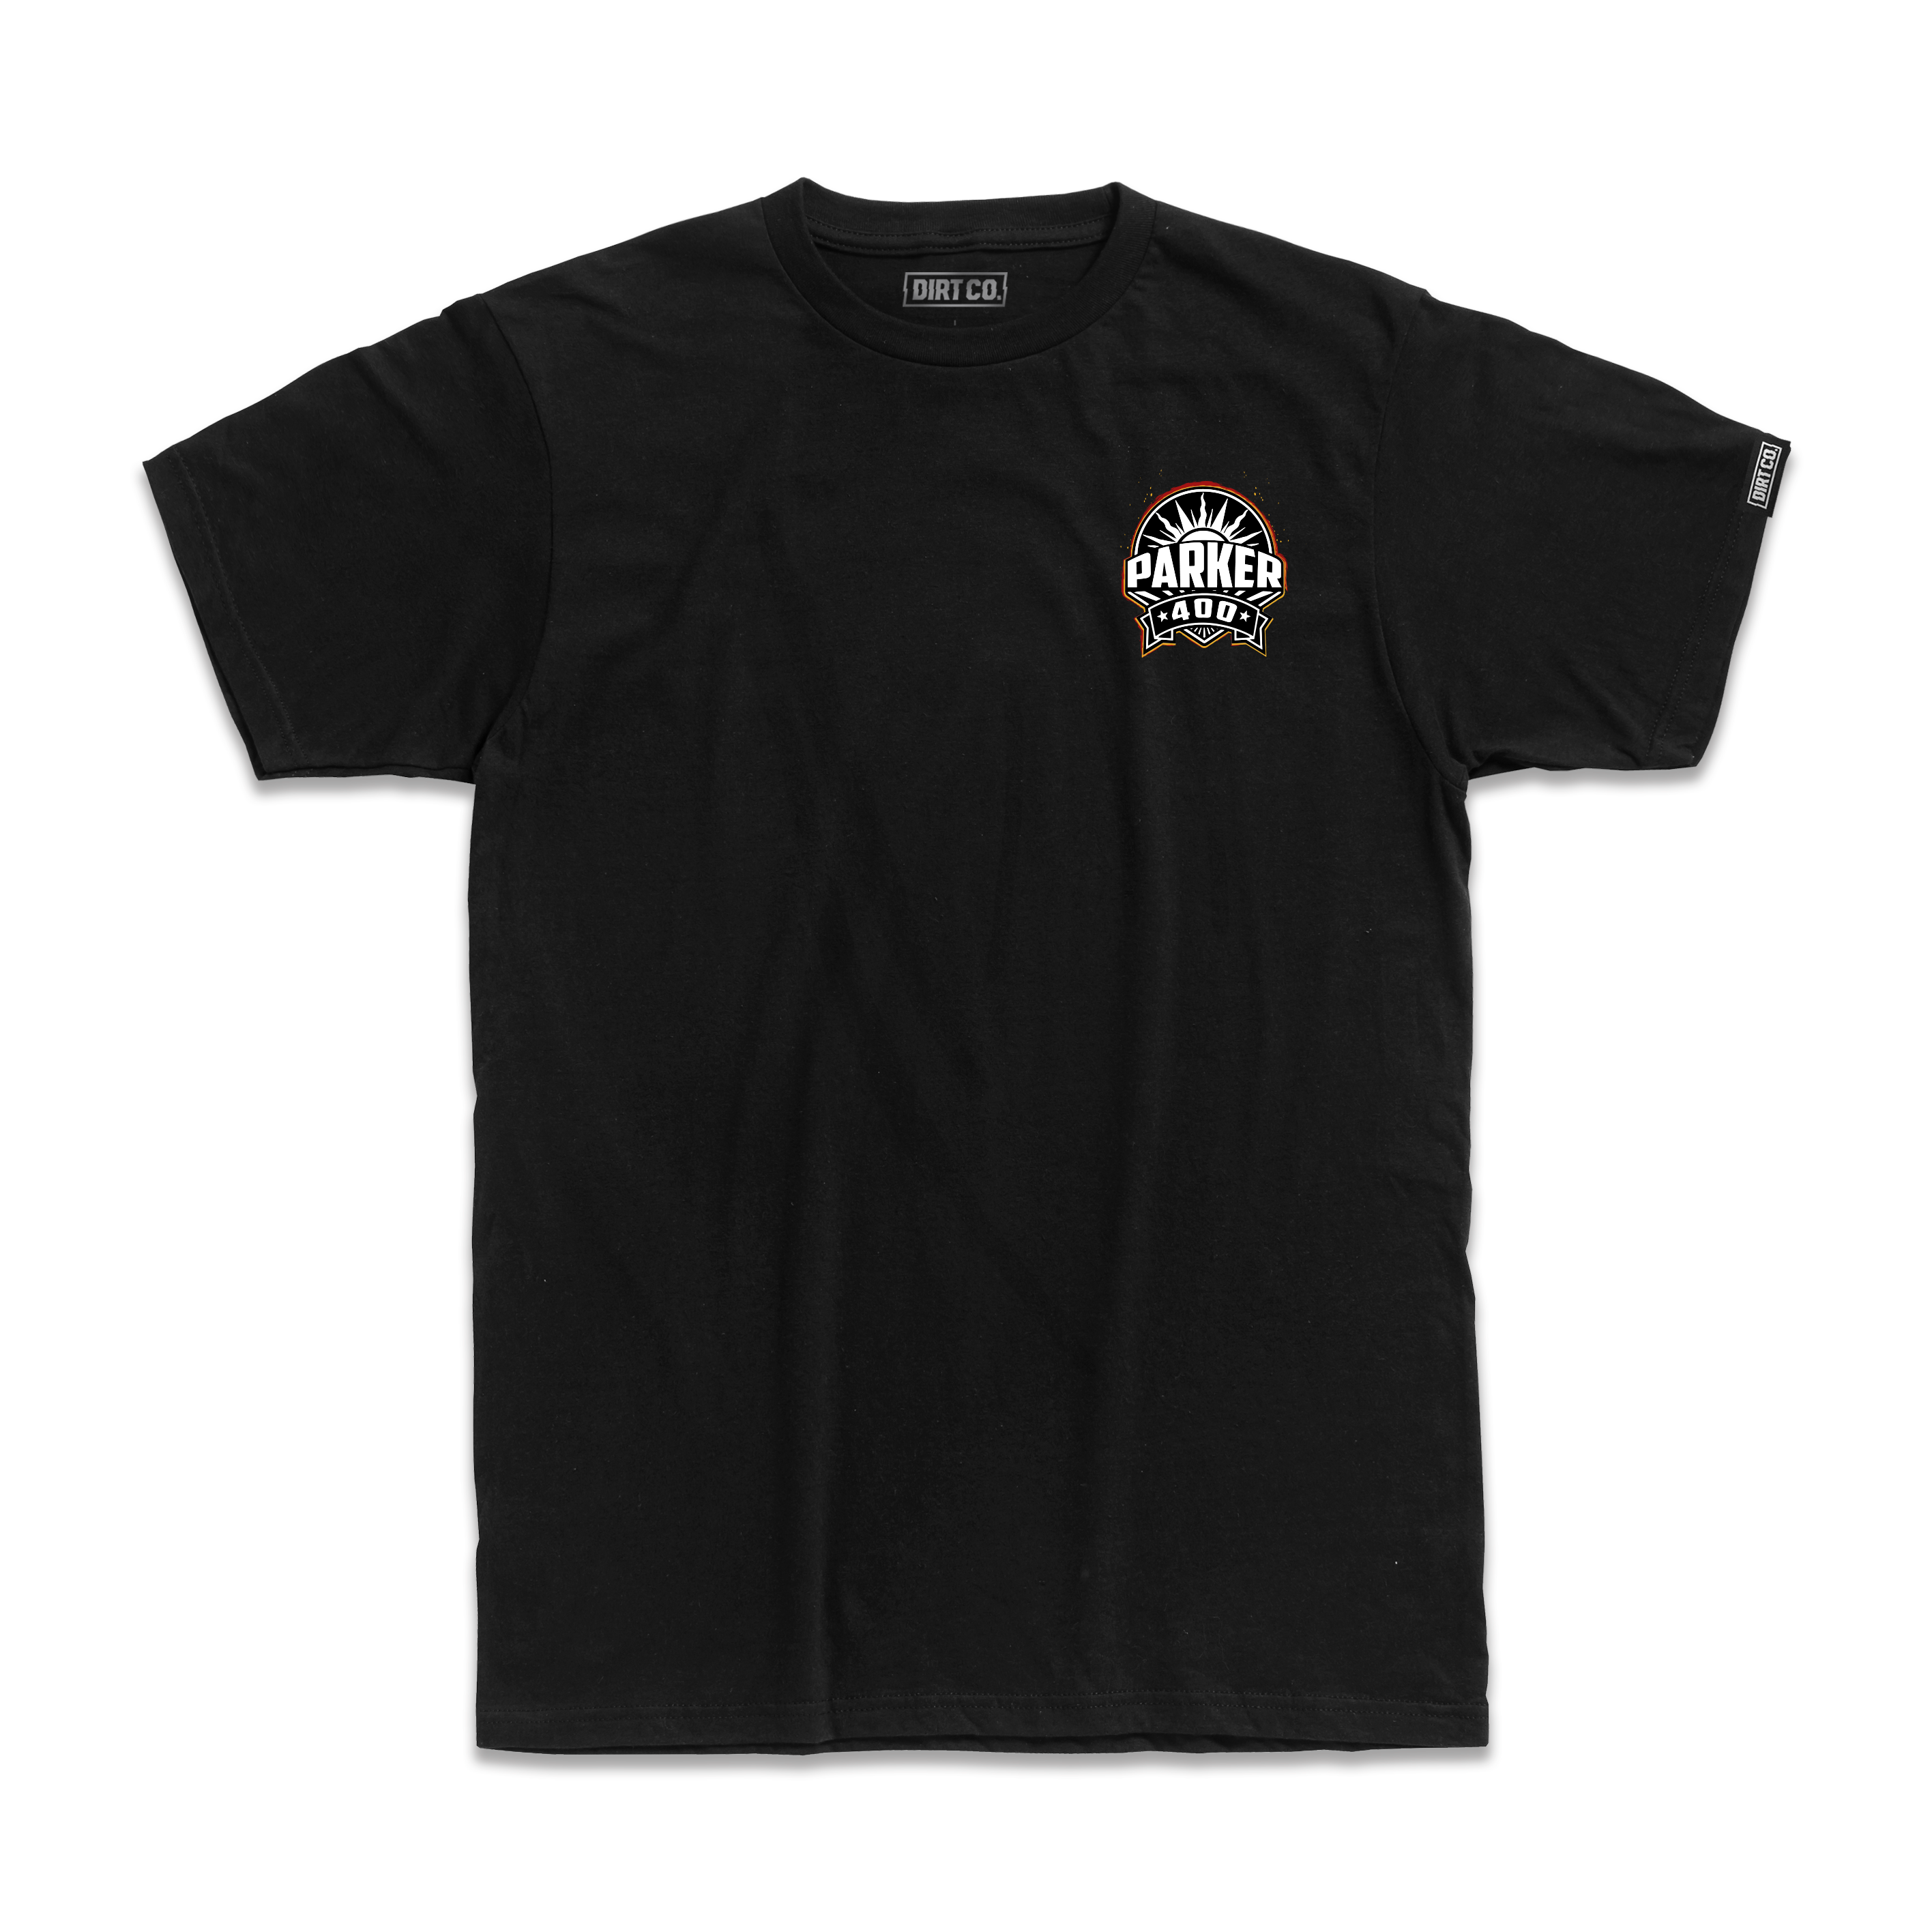 Parker 400 "Manny Esquerra" Tribute Shirt (Black)